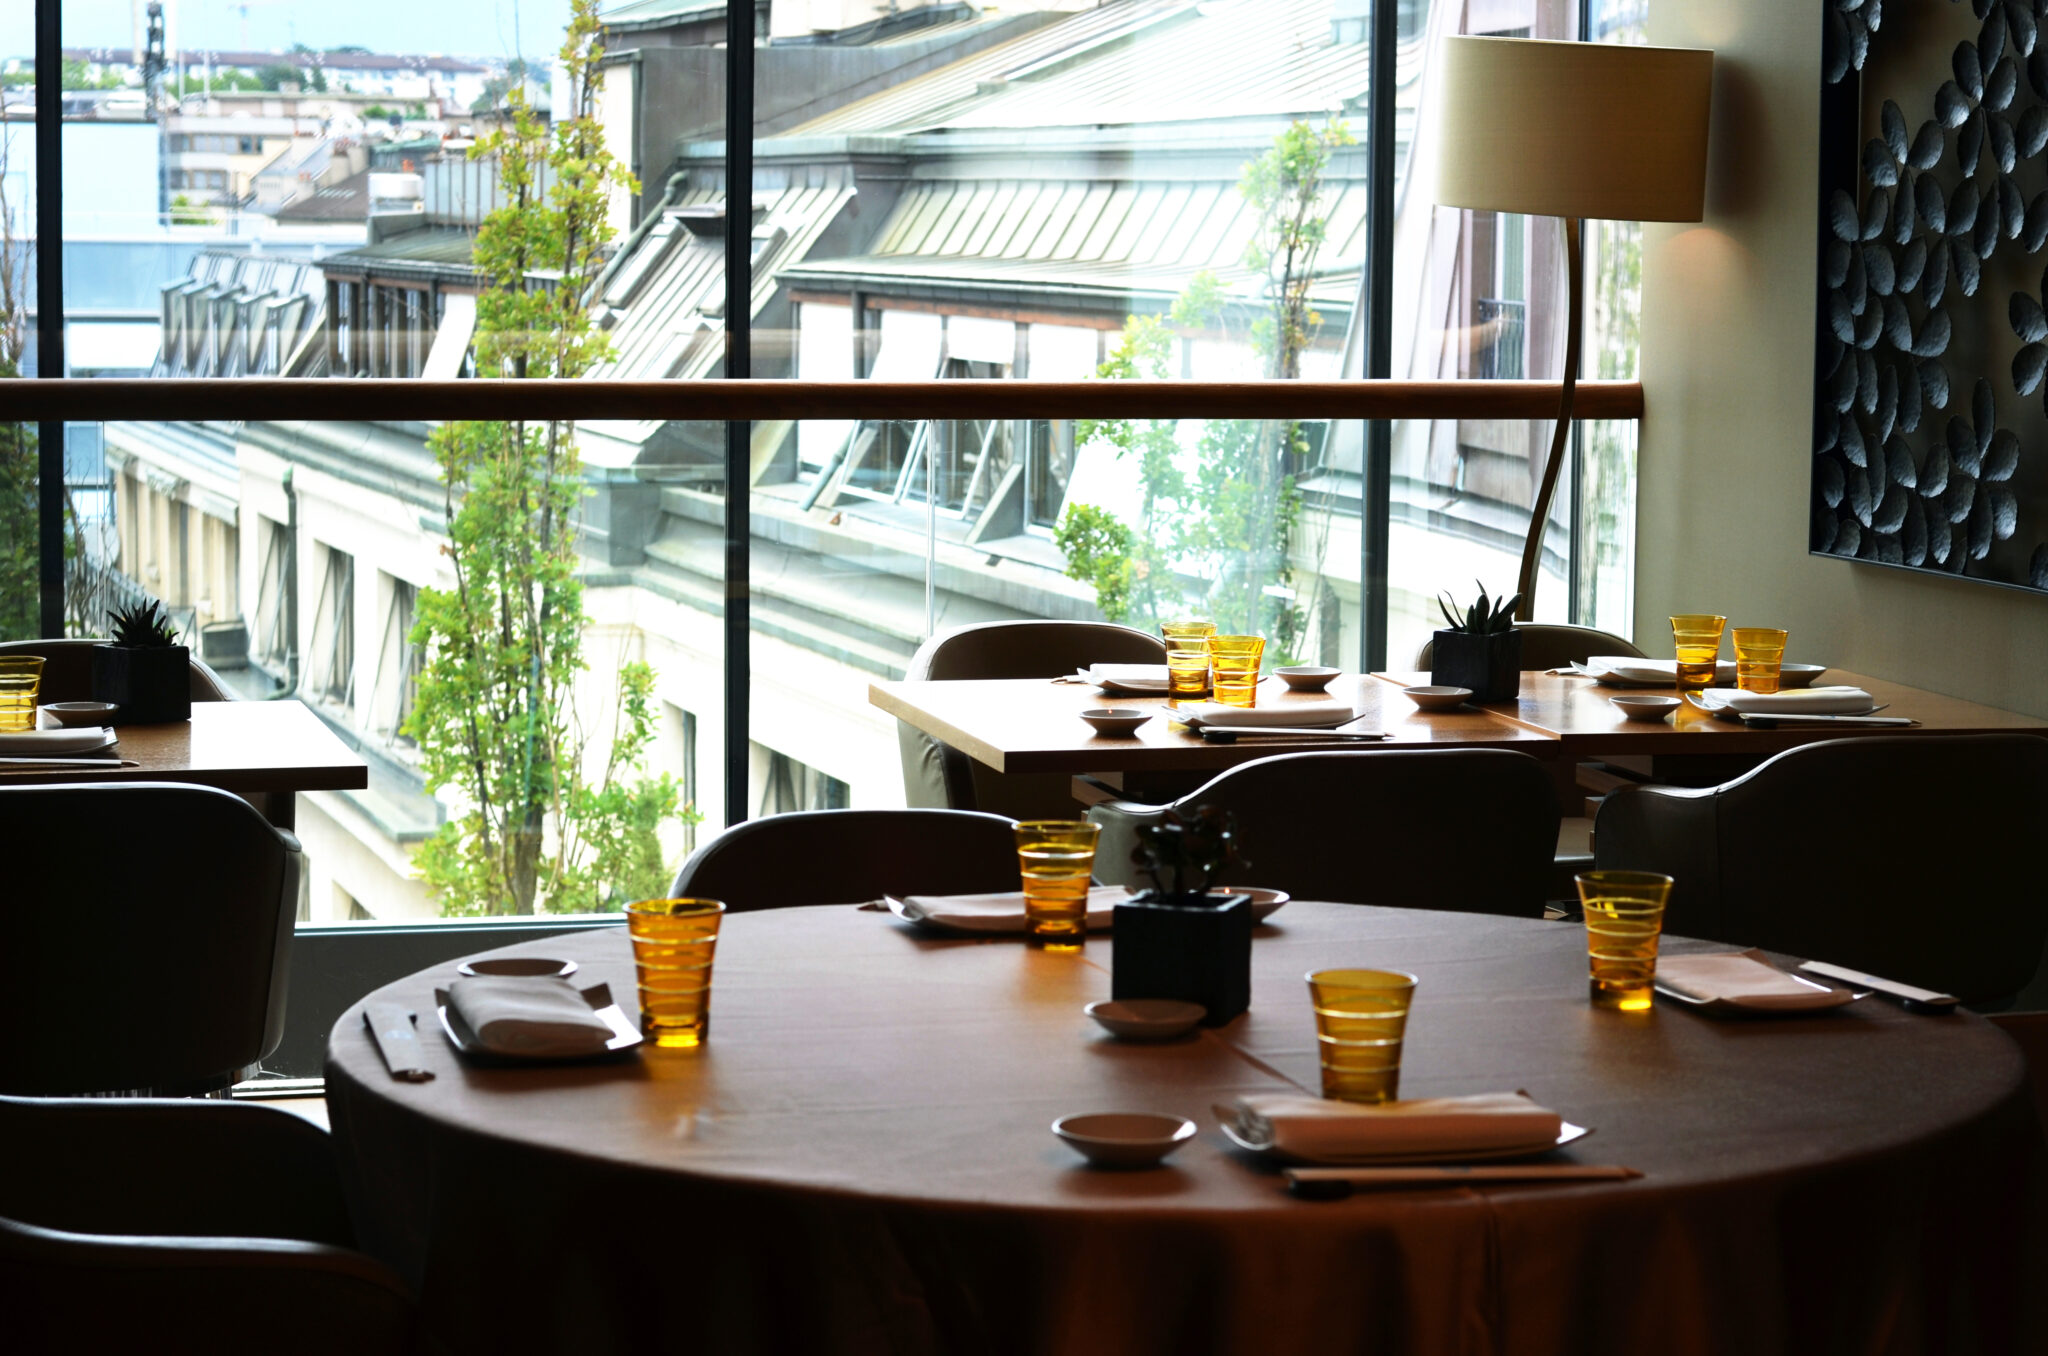 mercredie-blog-mode-suisse-geneve-geneva-switzerland-hotel-four-seasons-review-avis-best-meilleur-massage-spa-mont-blanc-restaurant